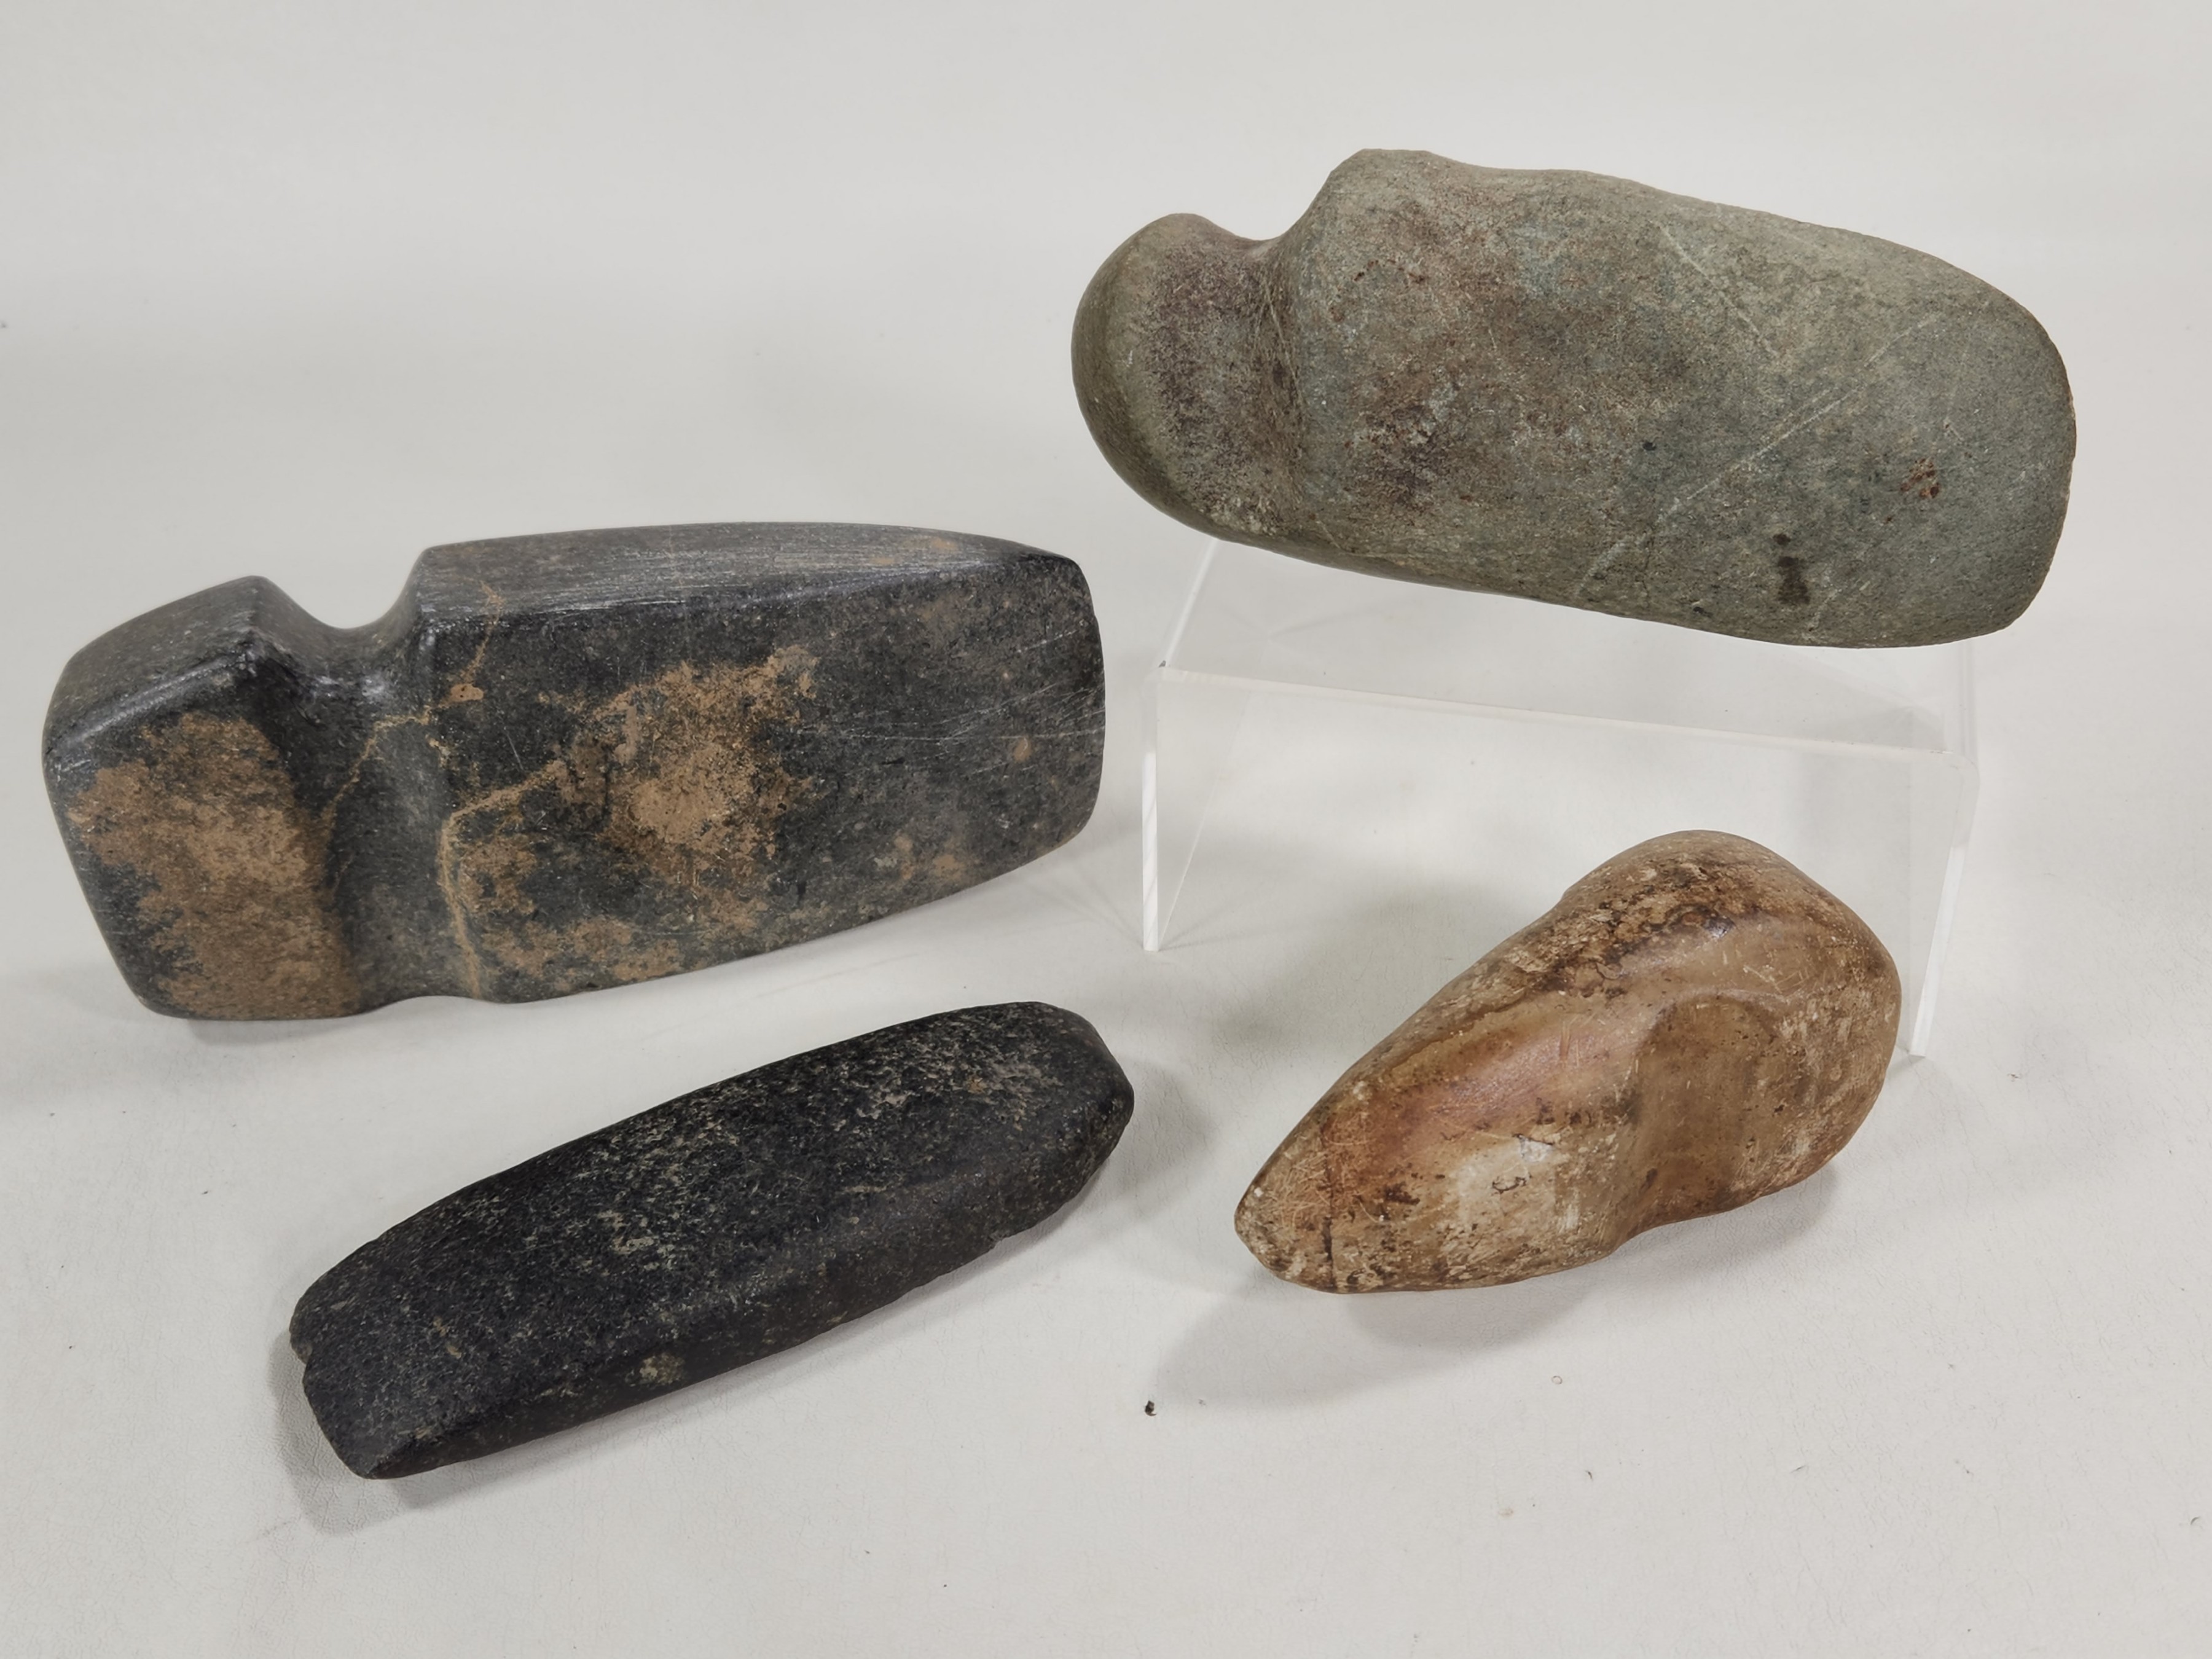 Item: Native American Stone Tools